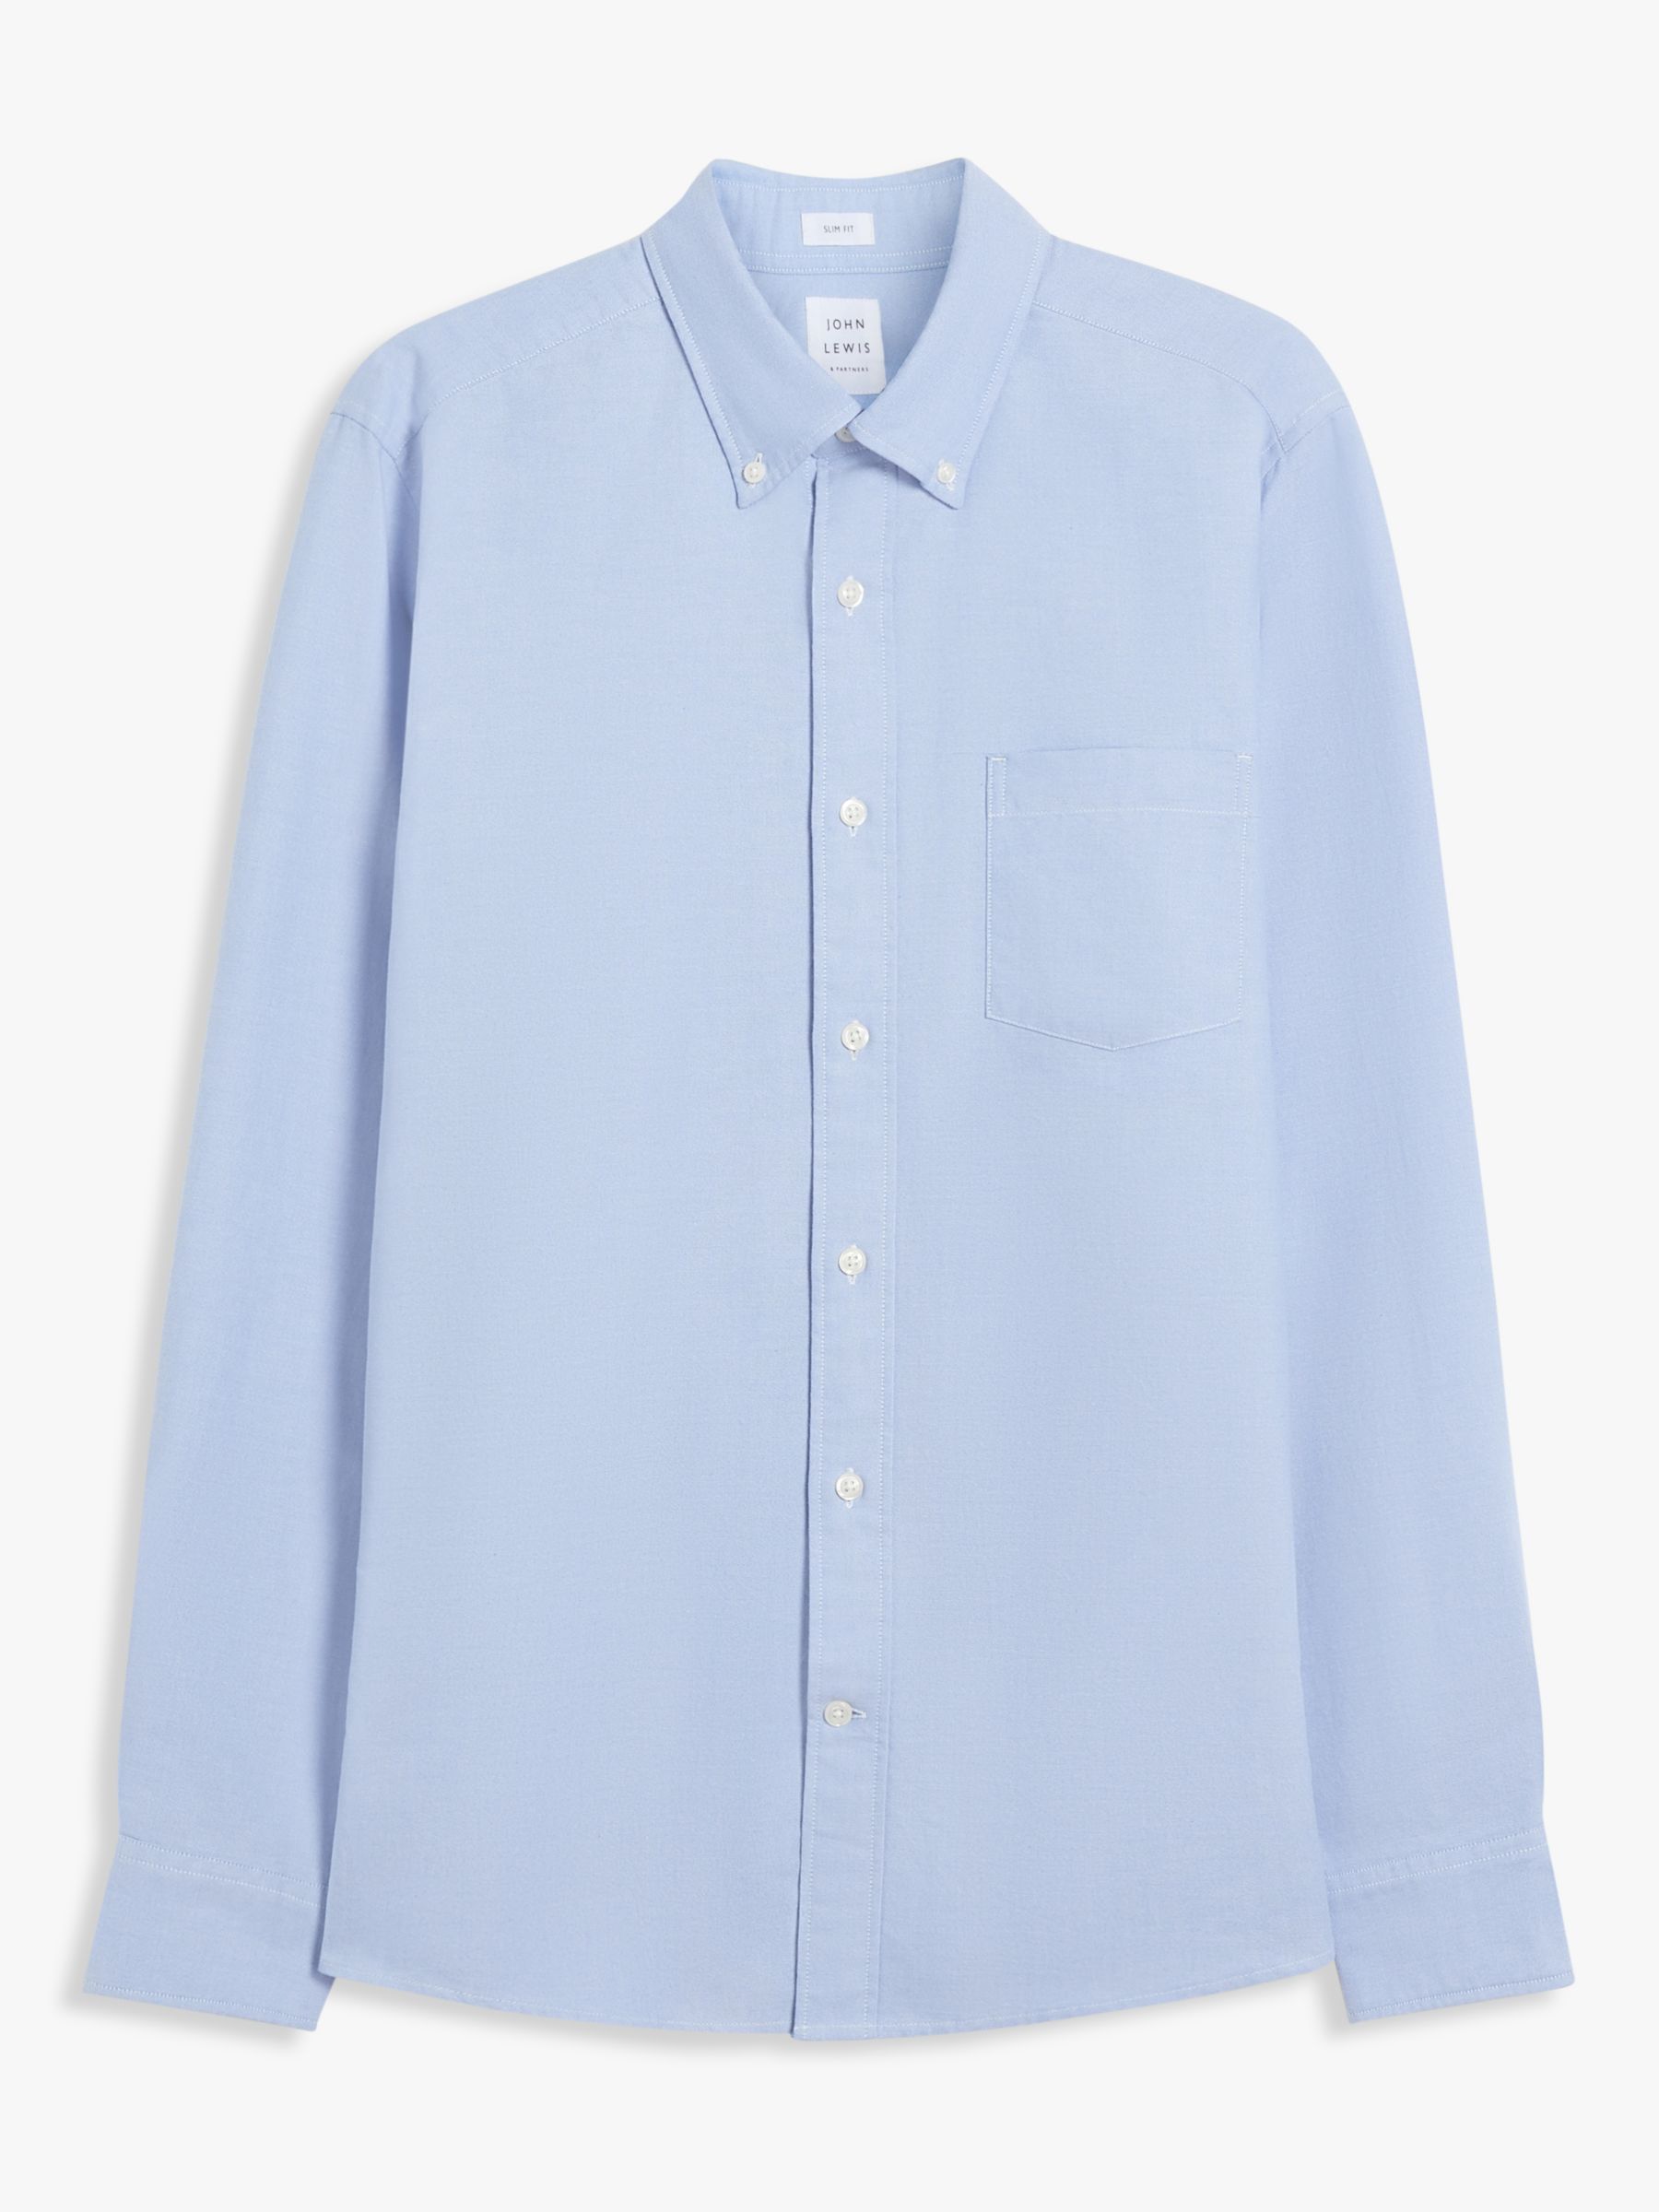 John Lewis Regular Fit Cotton Oxford Button Down Shirt, Blue at John ...